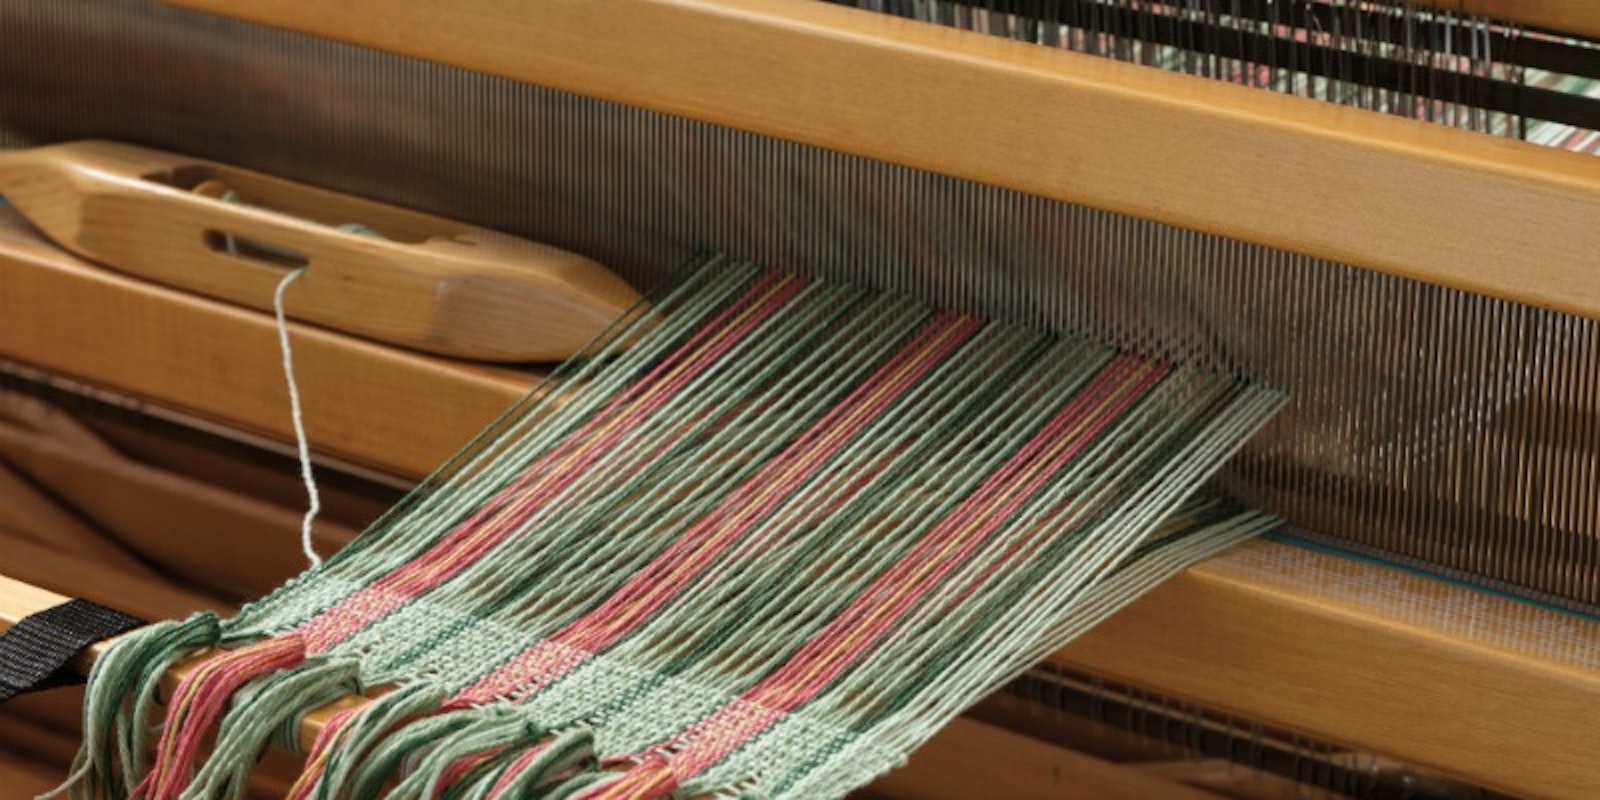 Choosing the Perfect Loom